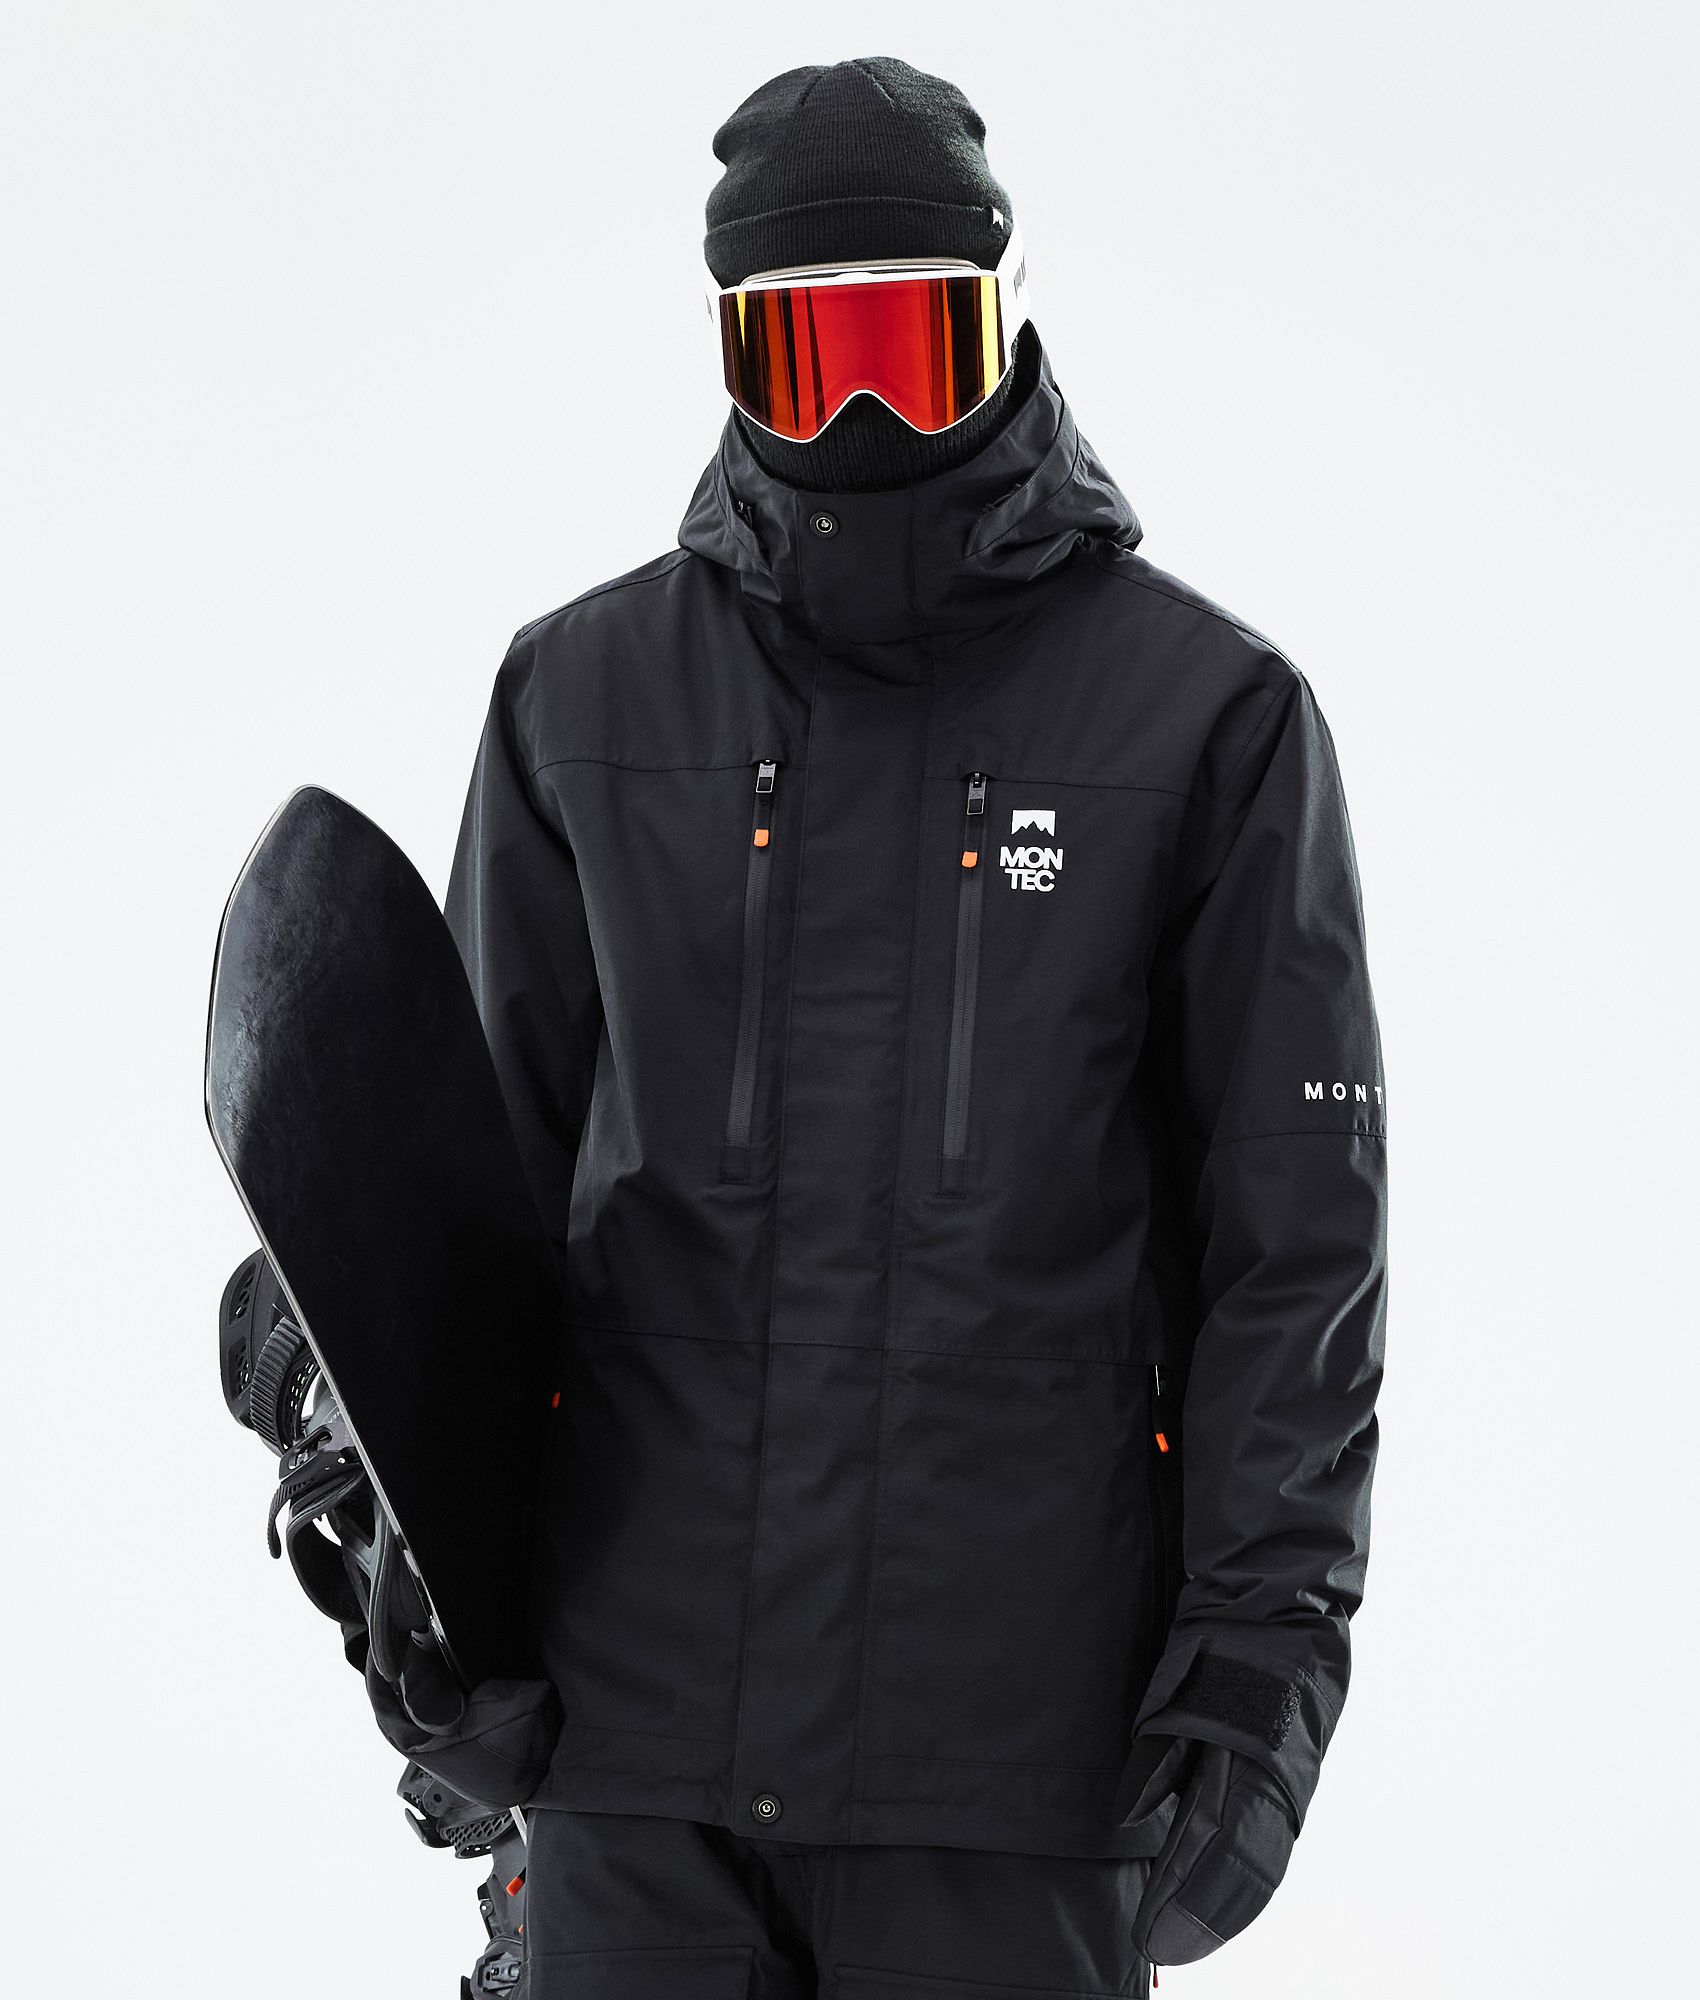 best online store for snowboard gear